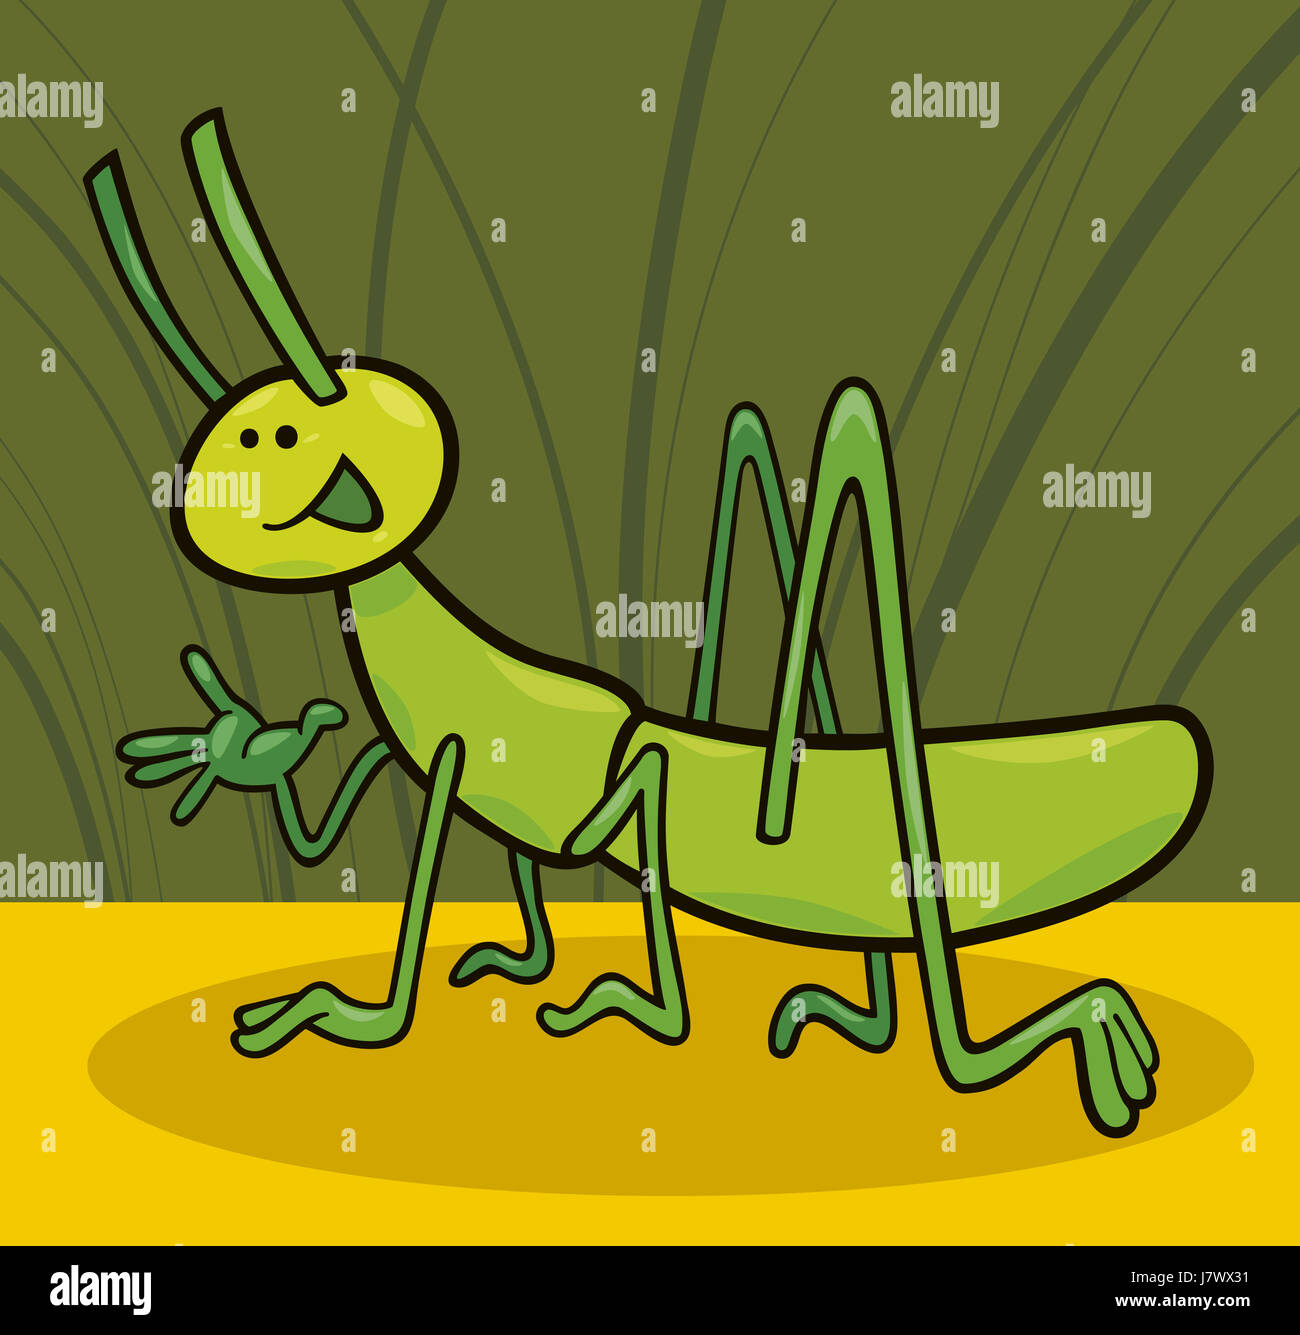 insect illustration grasshopper cricket funny bug cartoon comics laugh  laughs Stock Photo - Alamy